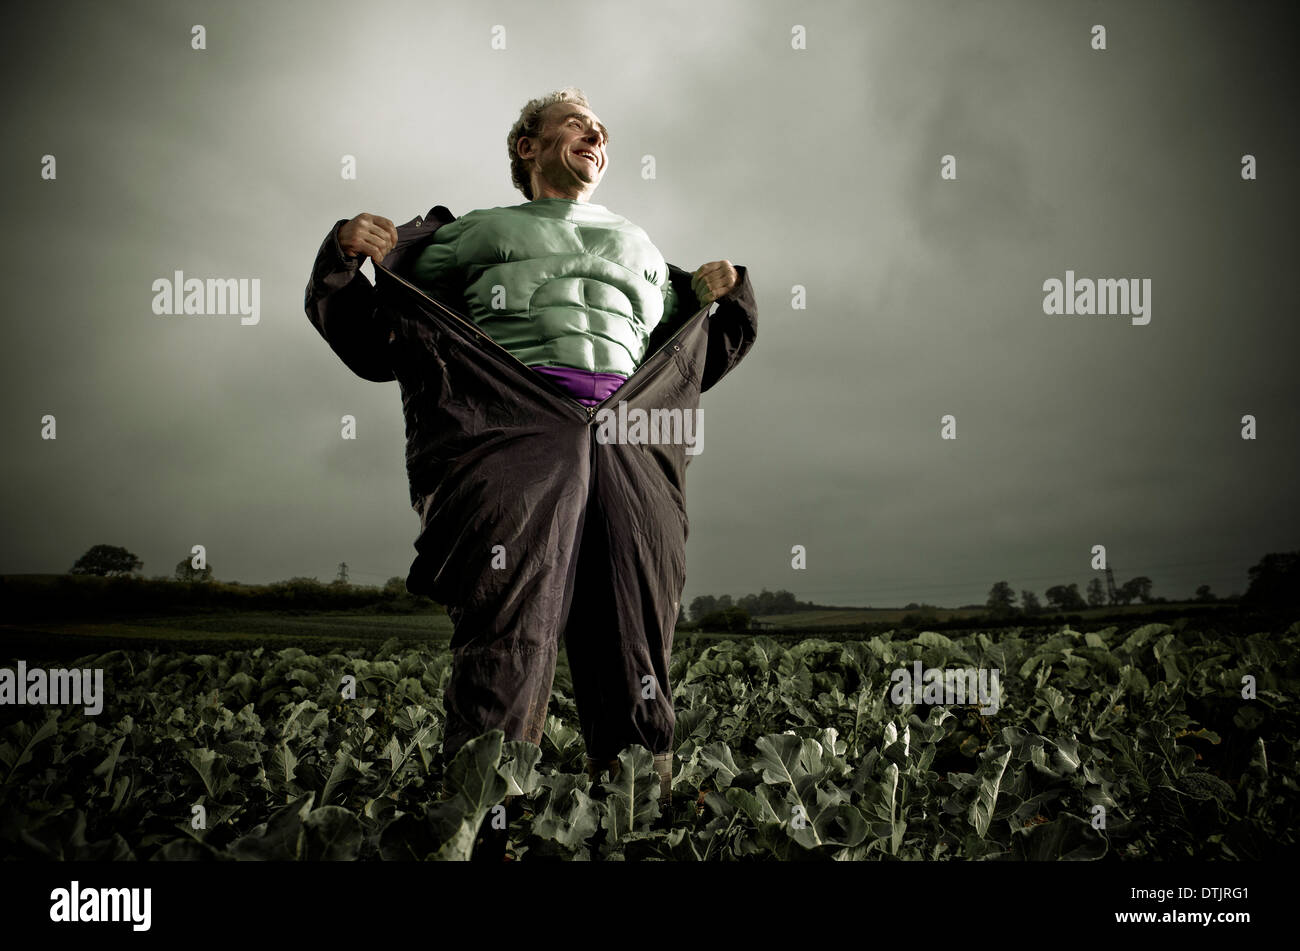 SUPERHERO COSTUME MAN STANDING IN A FIELD Stock Photo